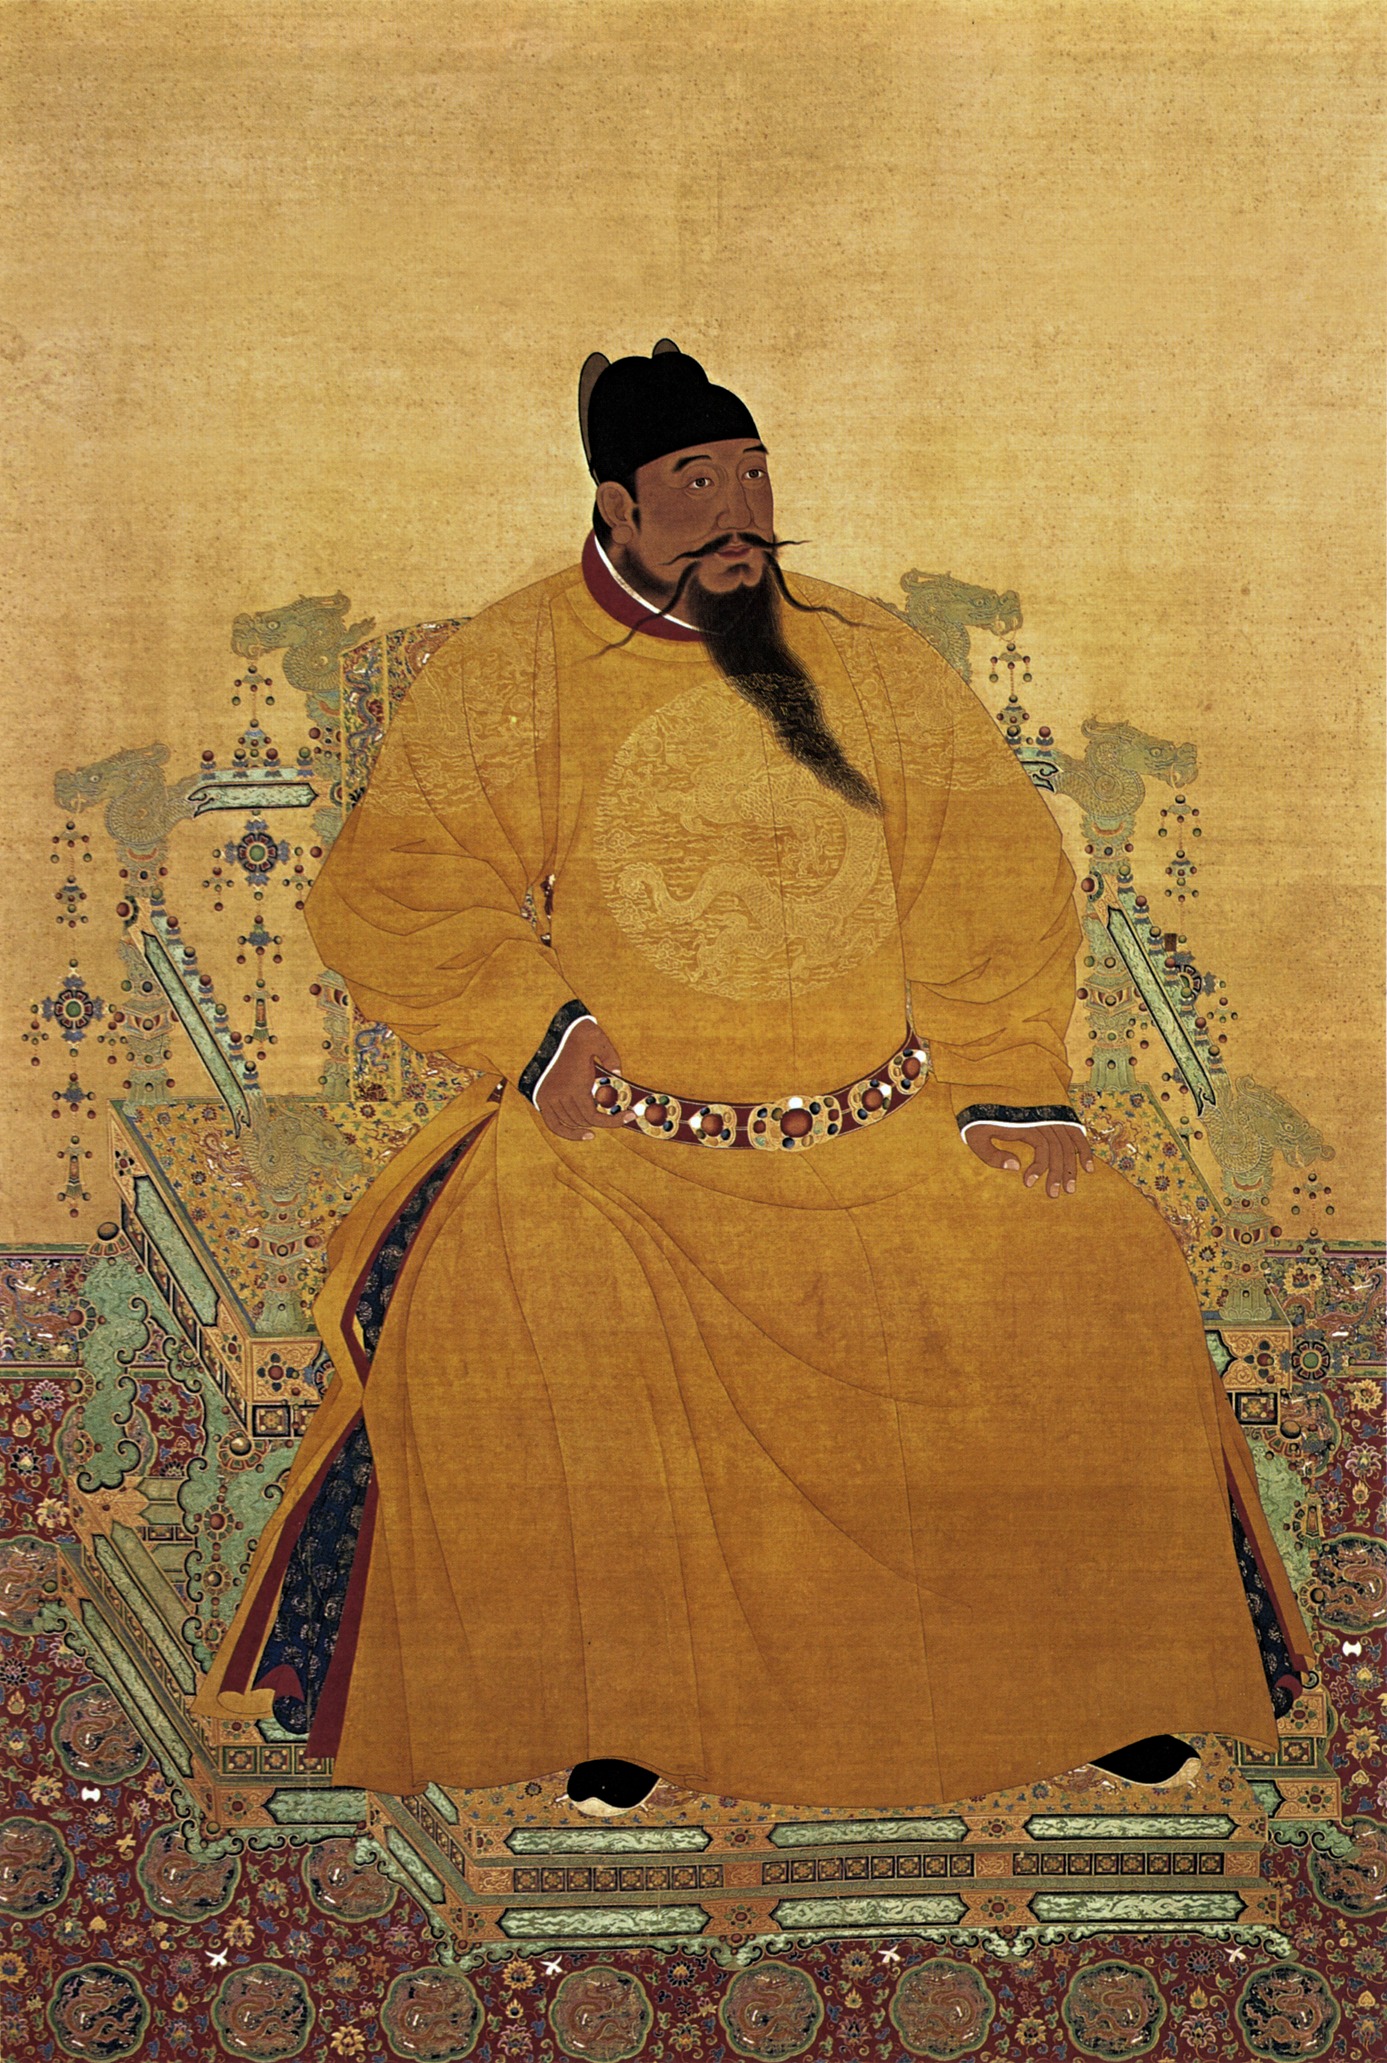 China emperor Image public domain